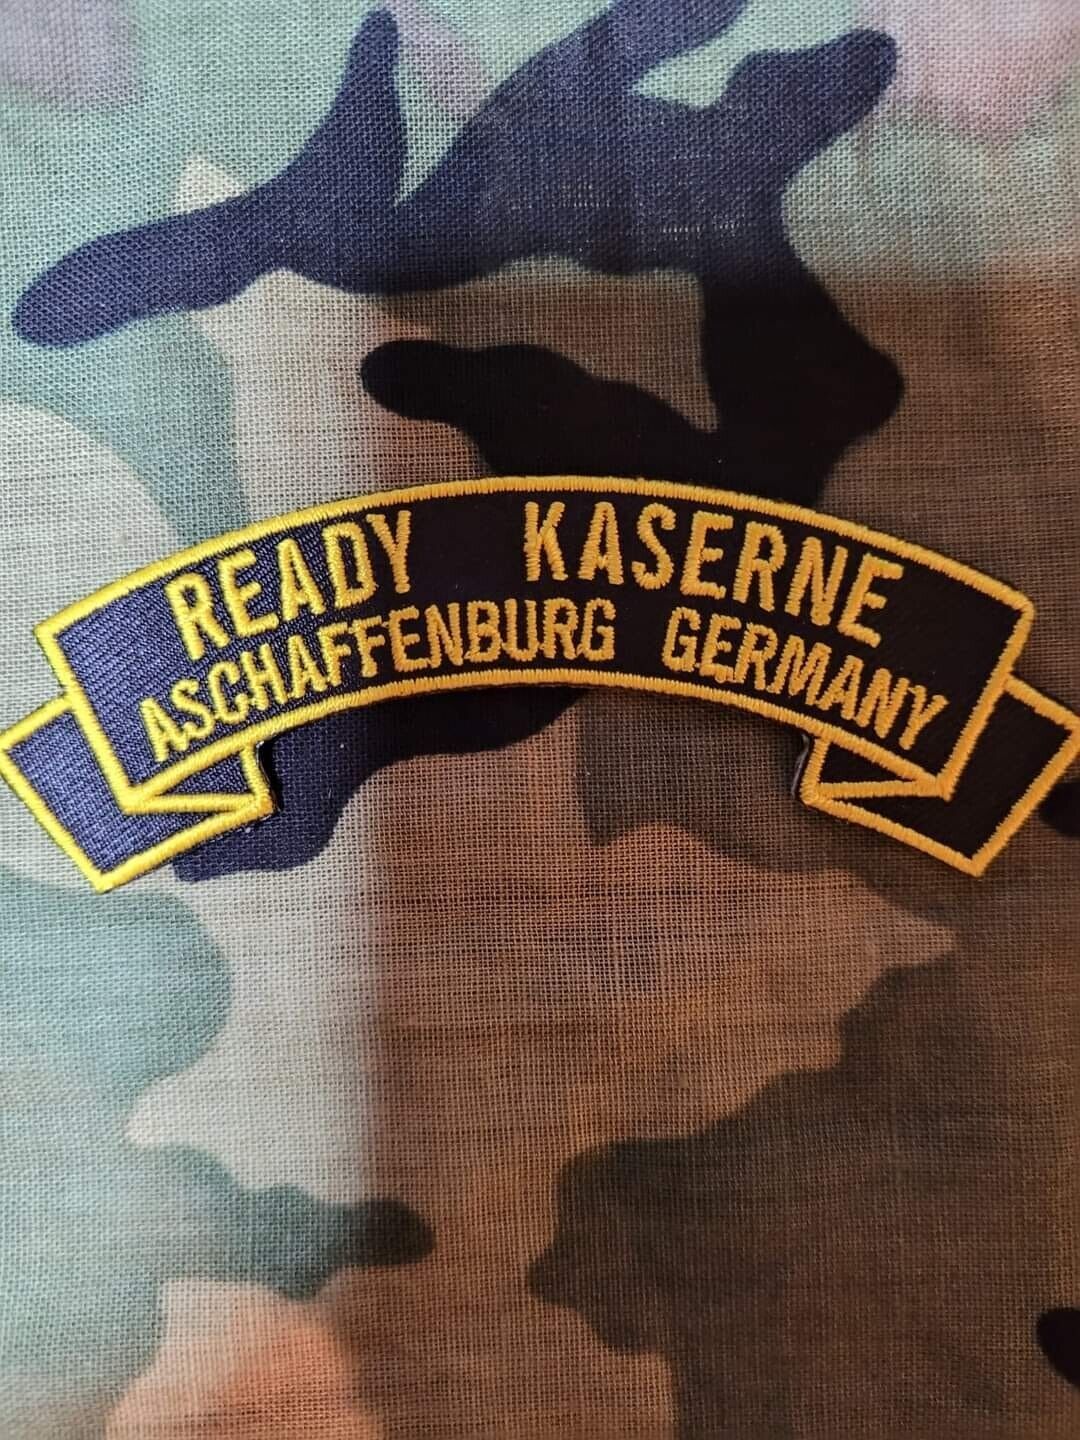 Ready Kaserne ,Aschaffenburg  Germany 4\